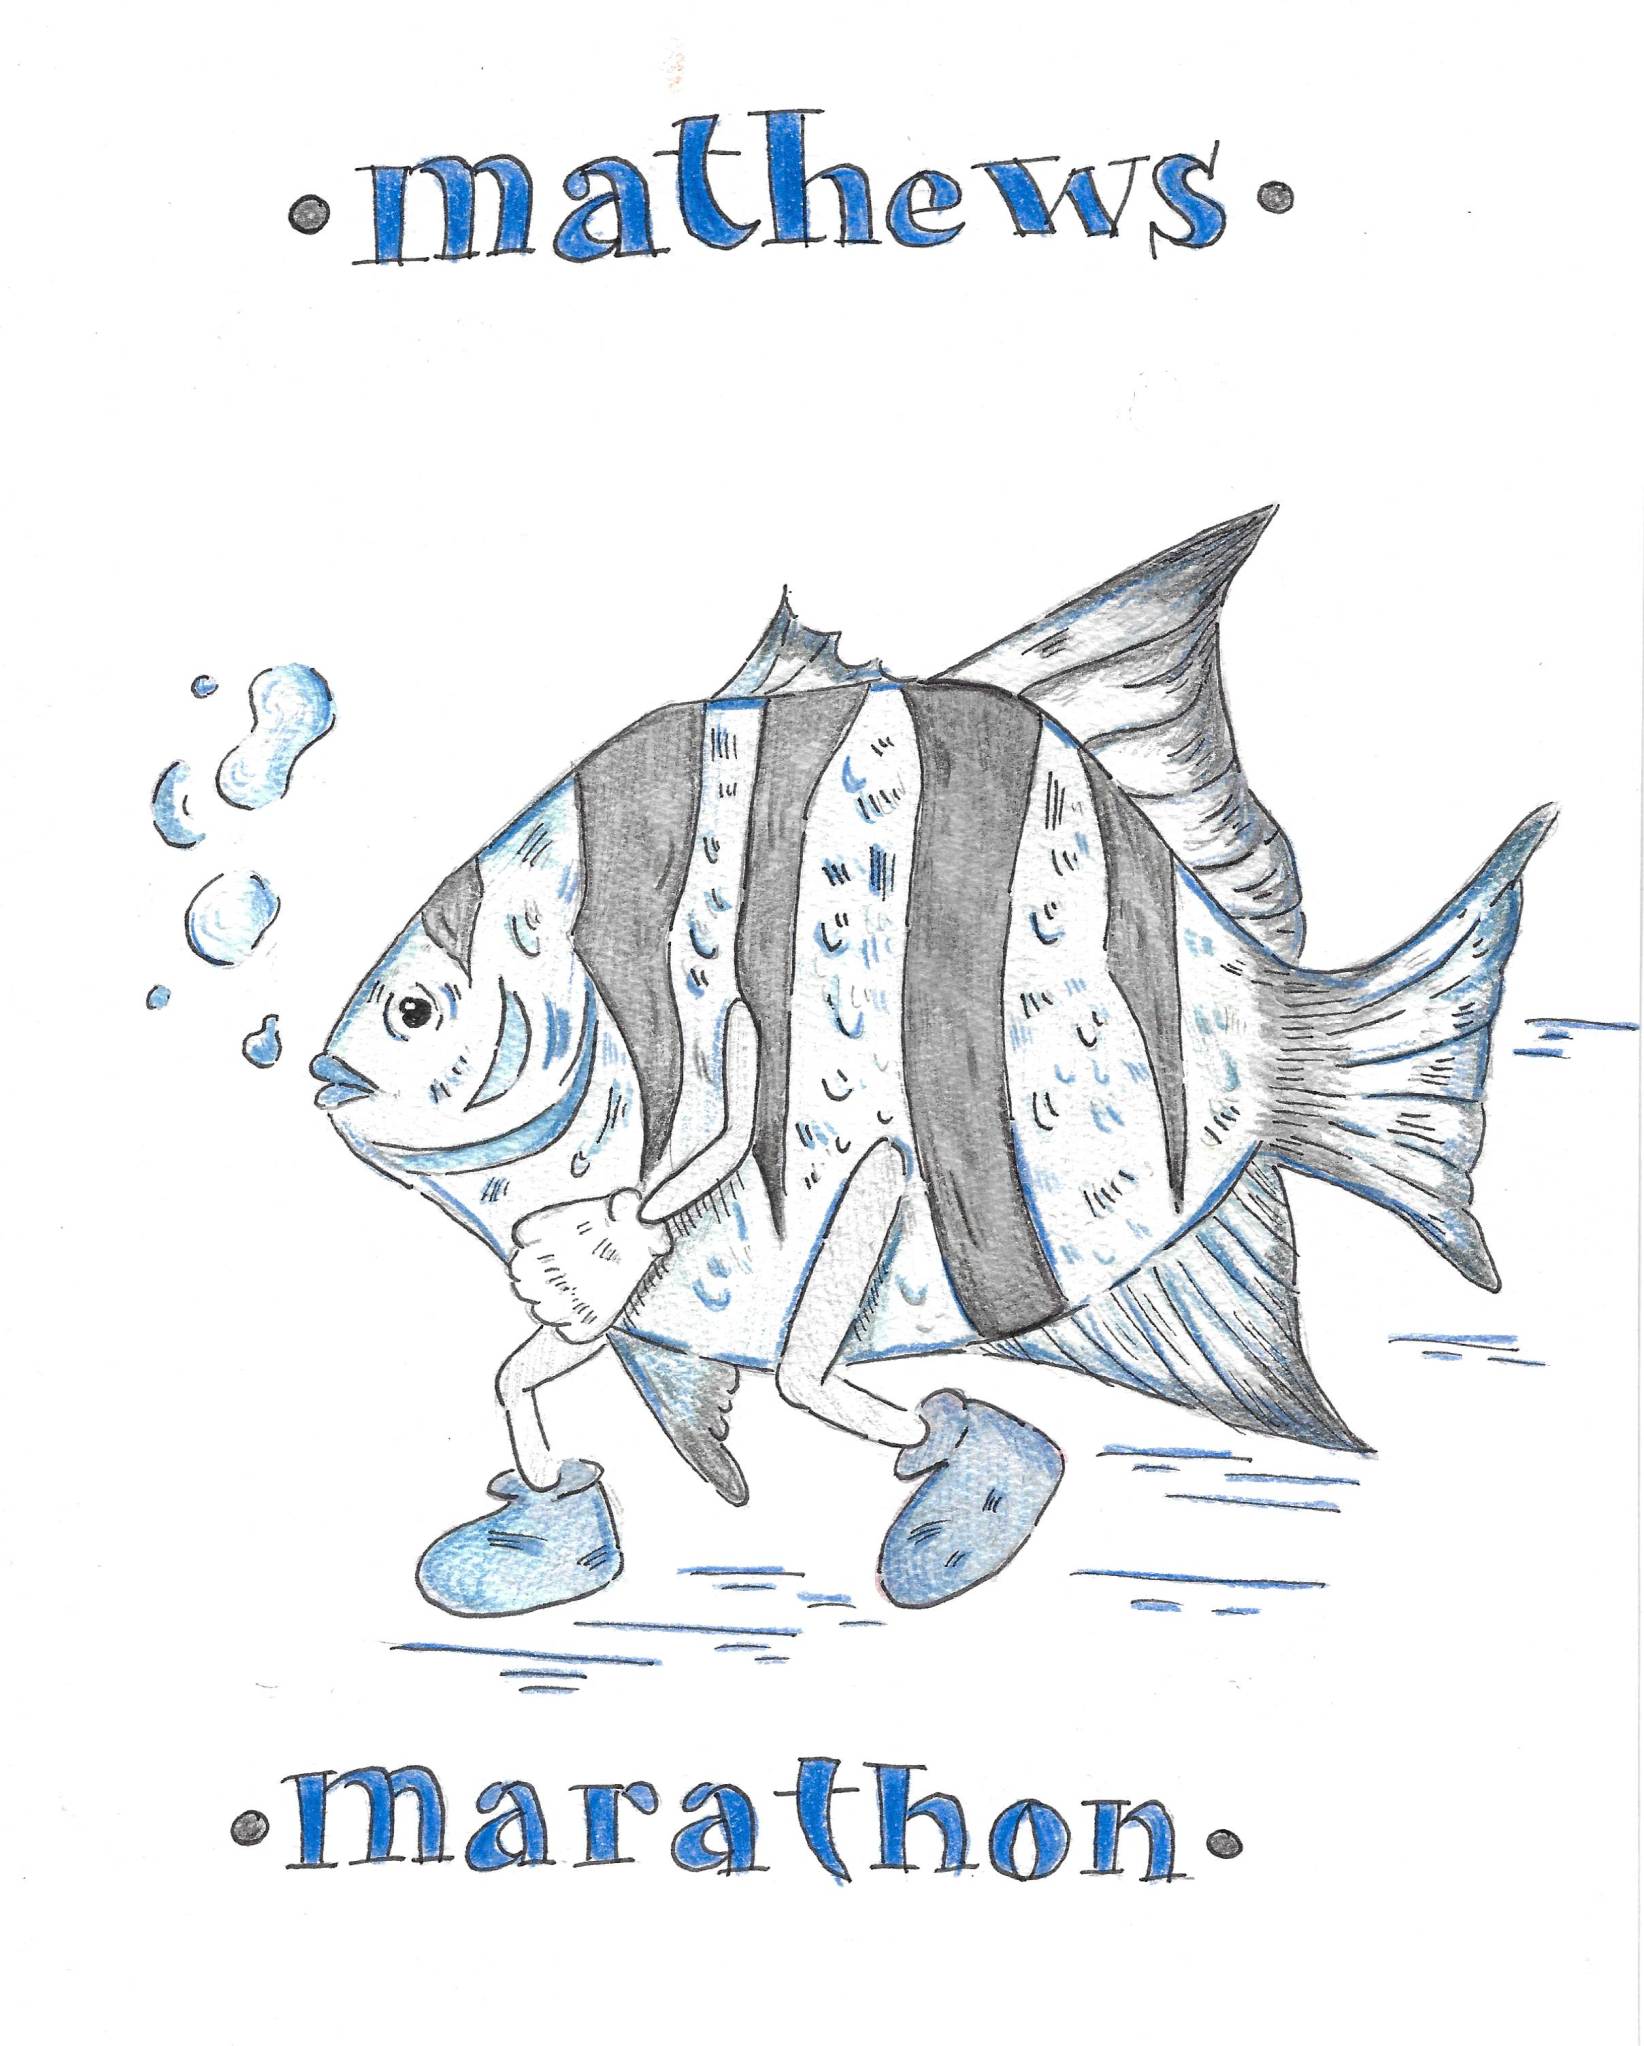 Mathews Marathon logo on RaceRaves